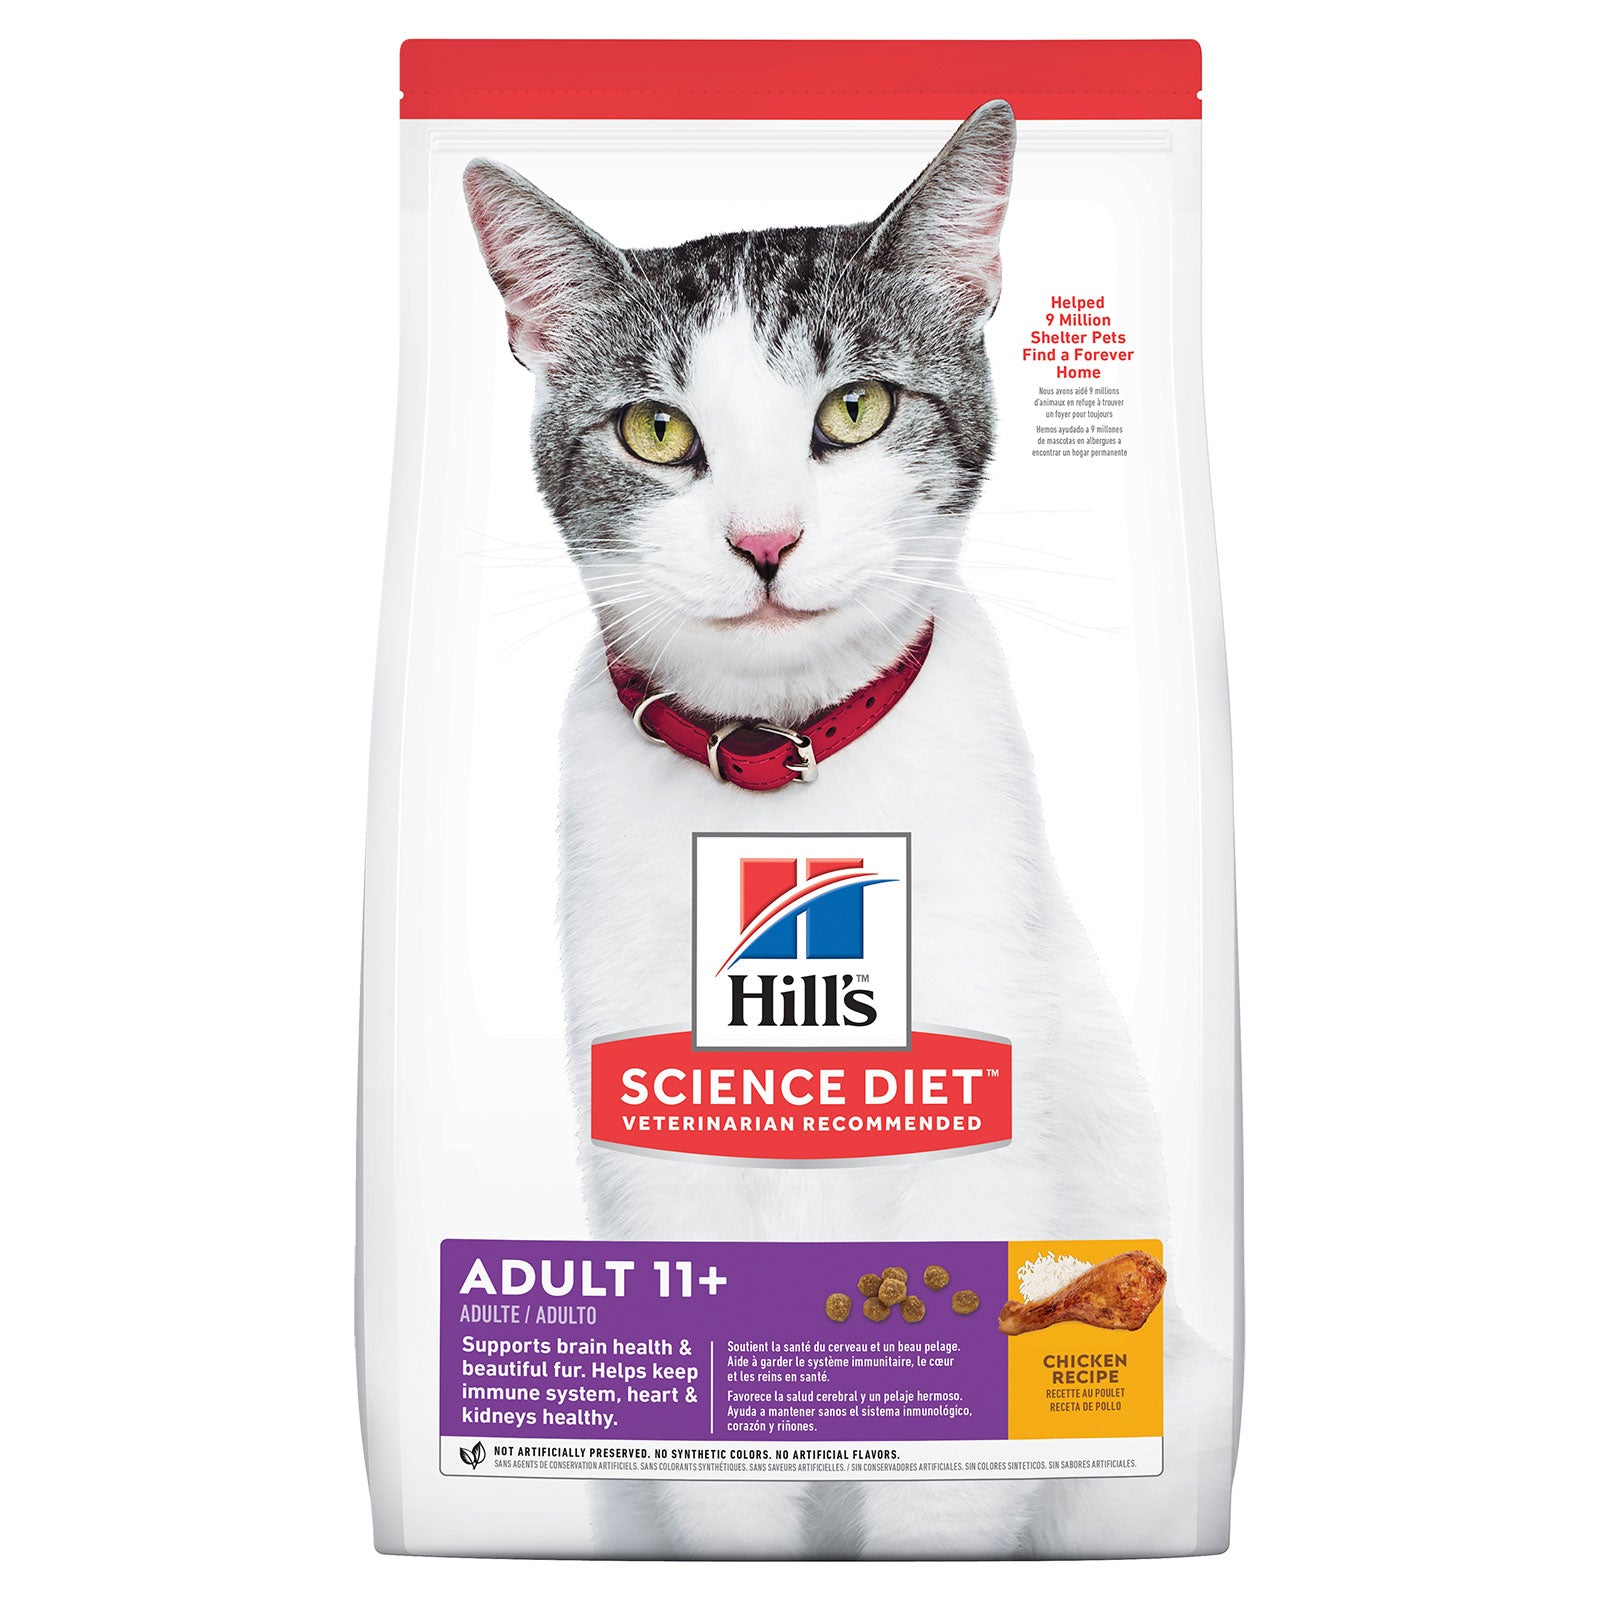 Hill's Science Diet Cat Food Adult 11+ Senior